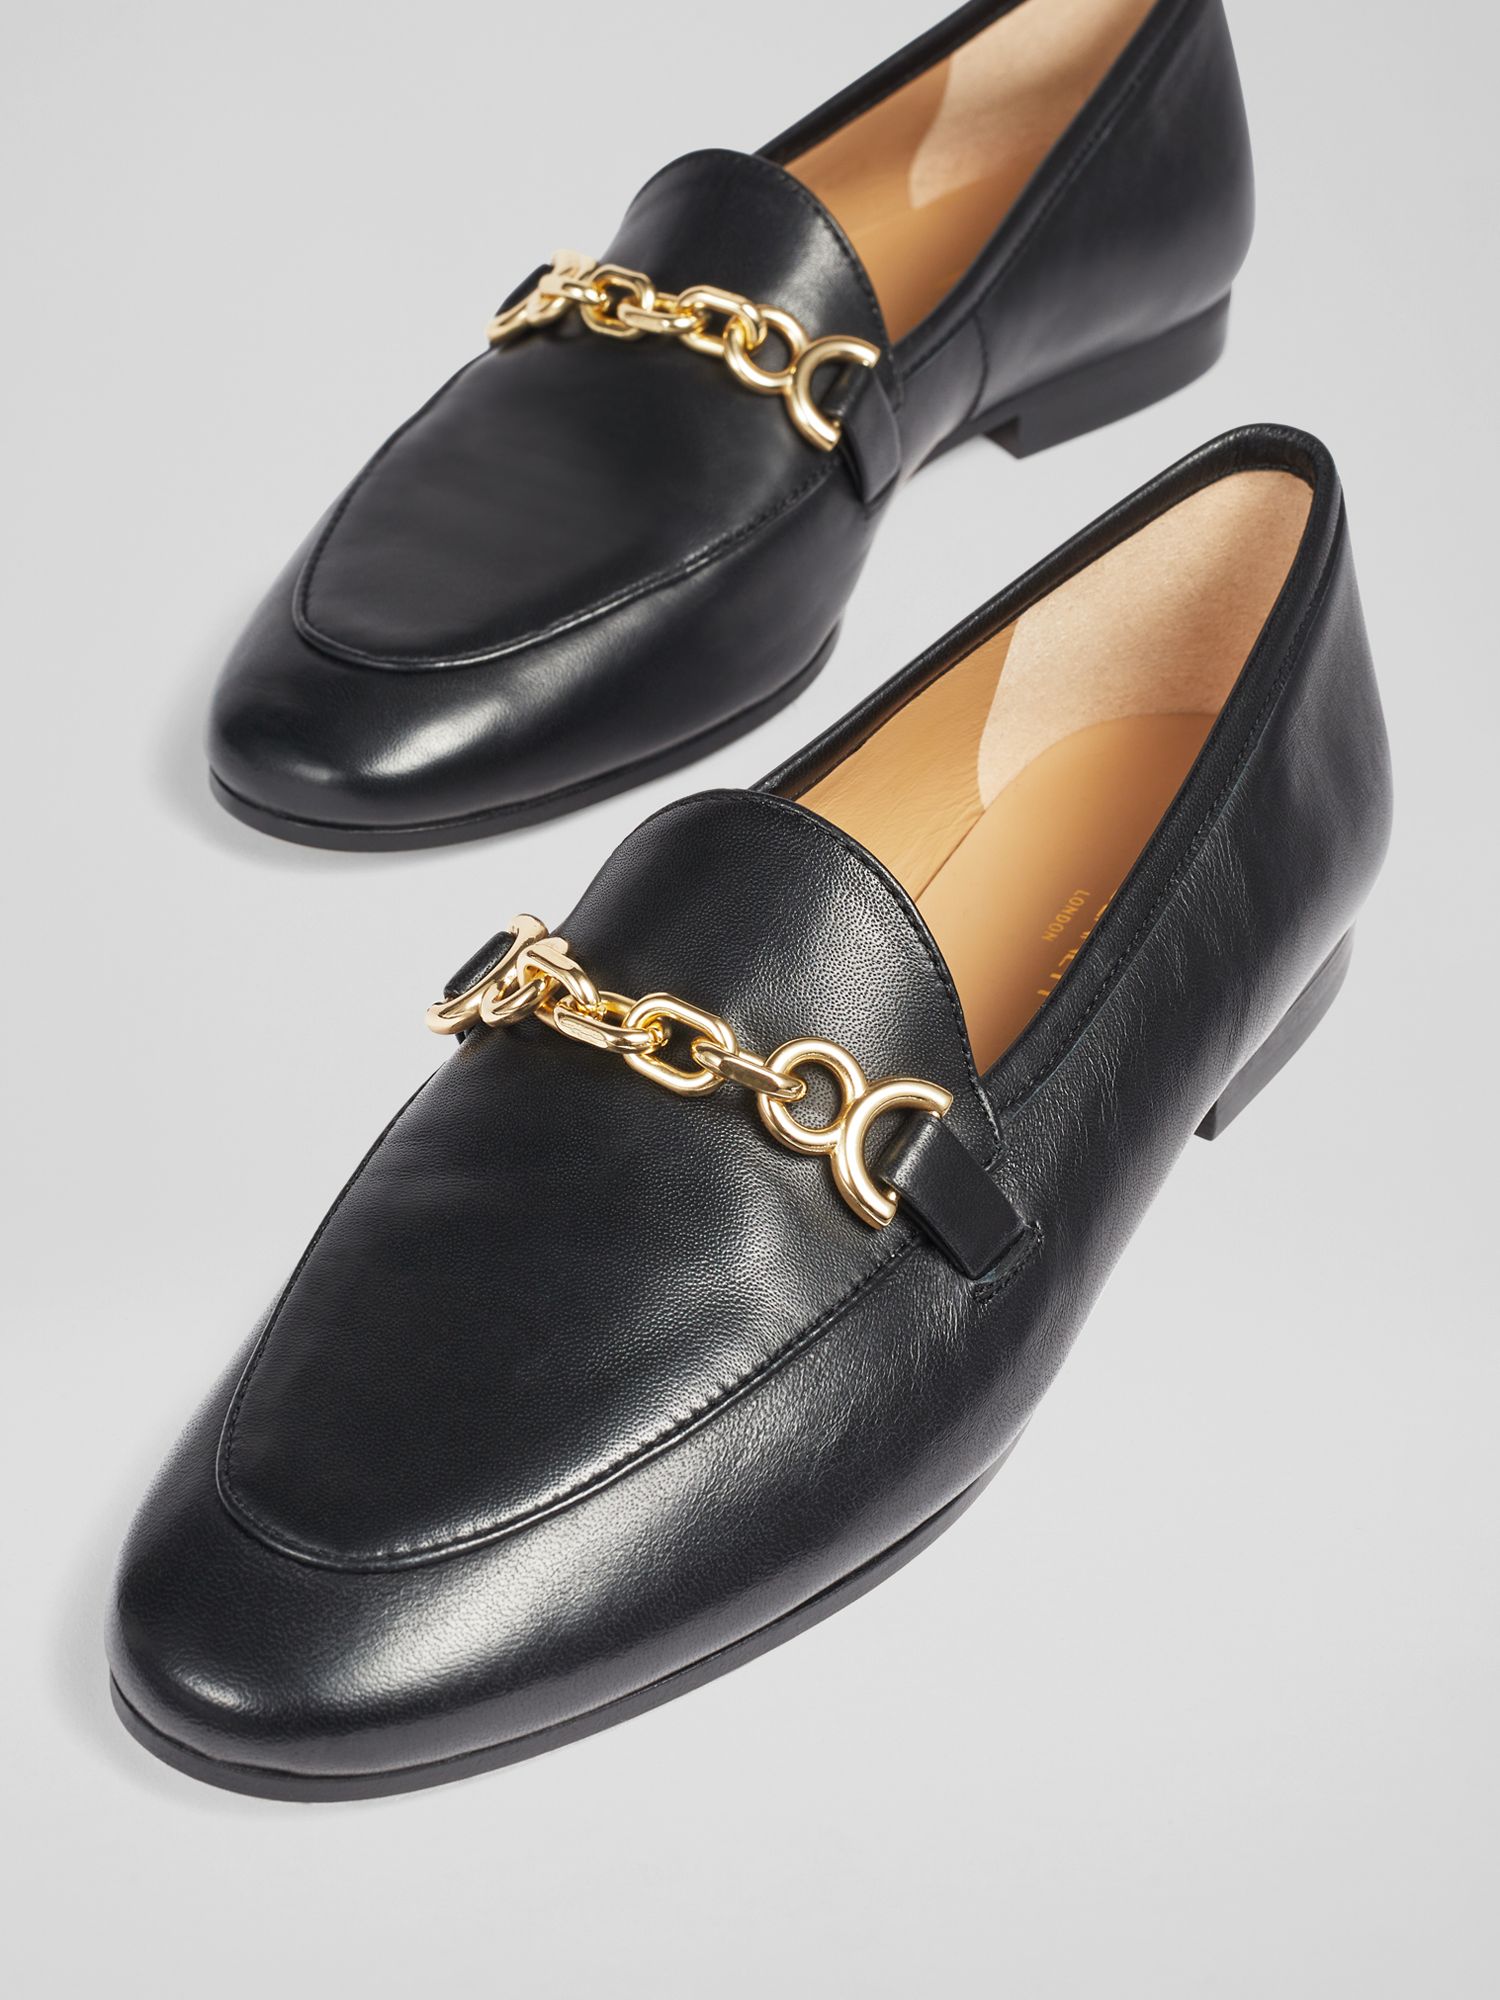 L.K.Bennett Adalynn Leather Loafers, Black, 6